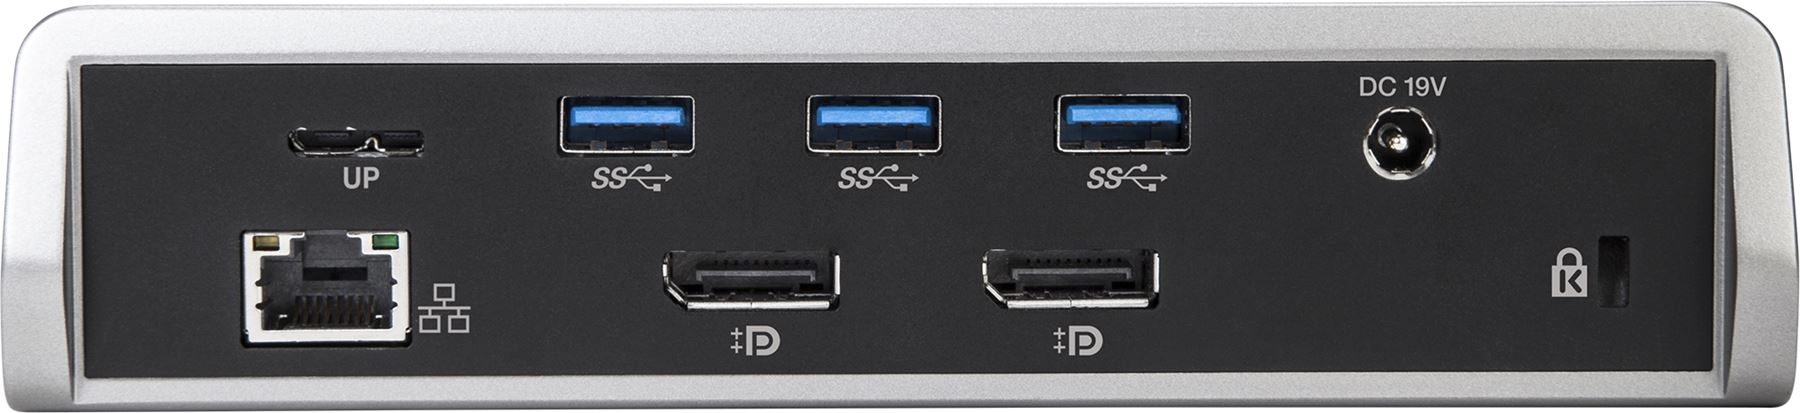 2K Dual DisplayPort Universal Docking Station - DOCK150USZ - Black